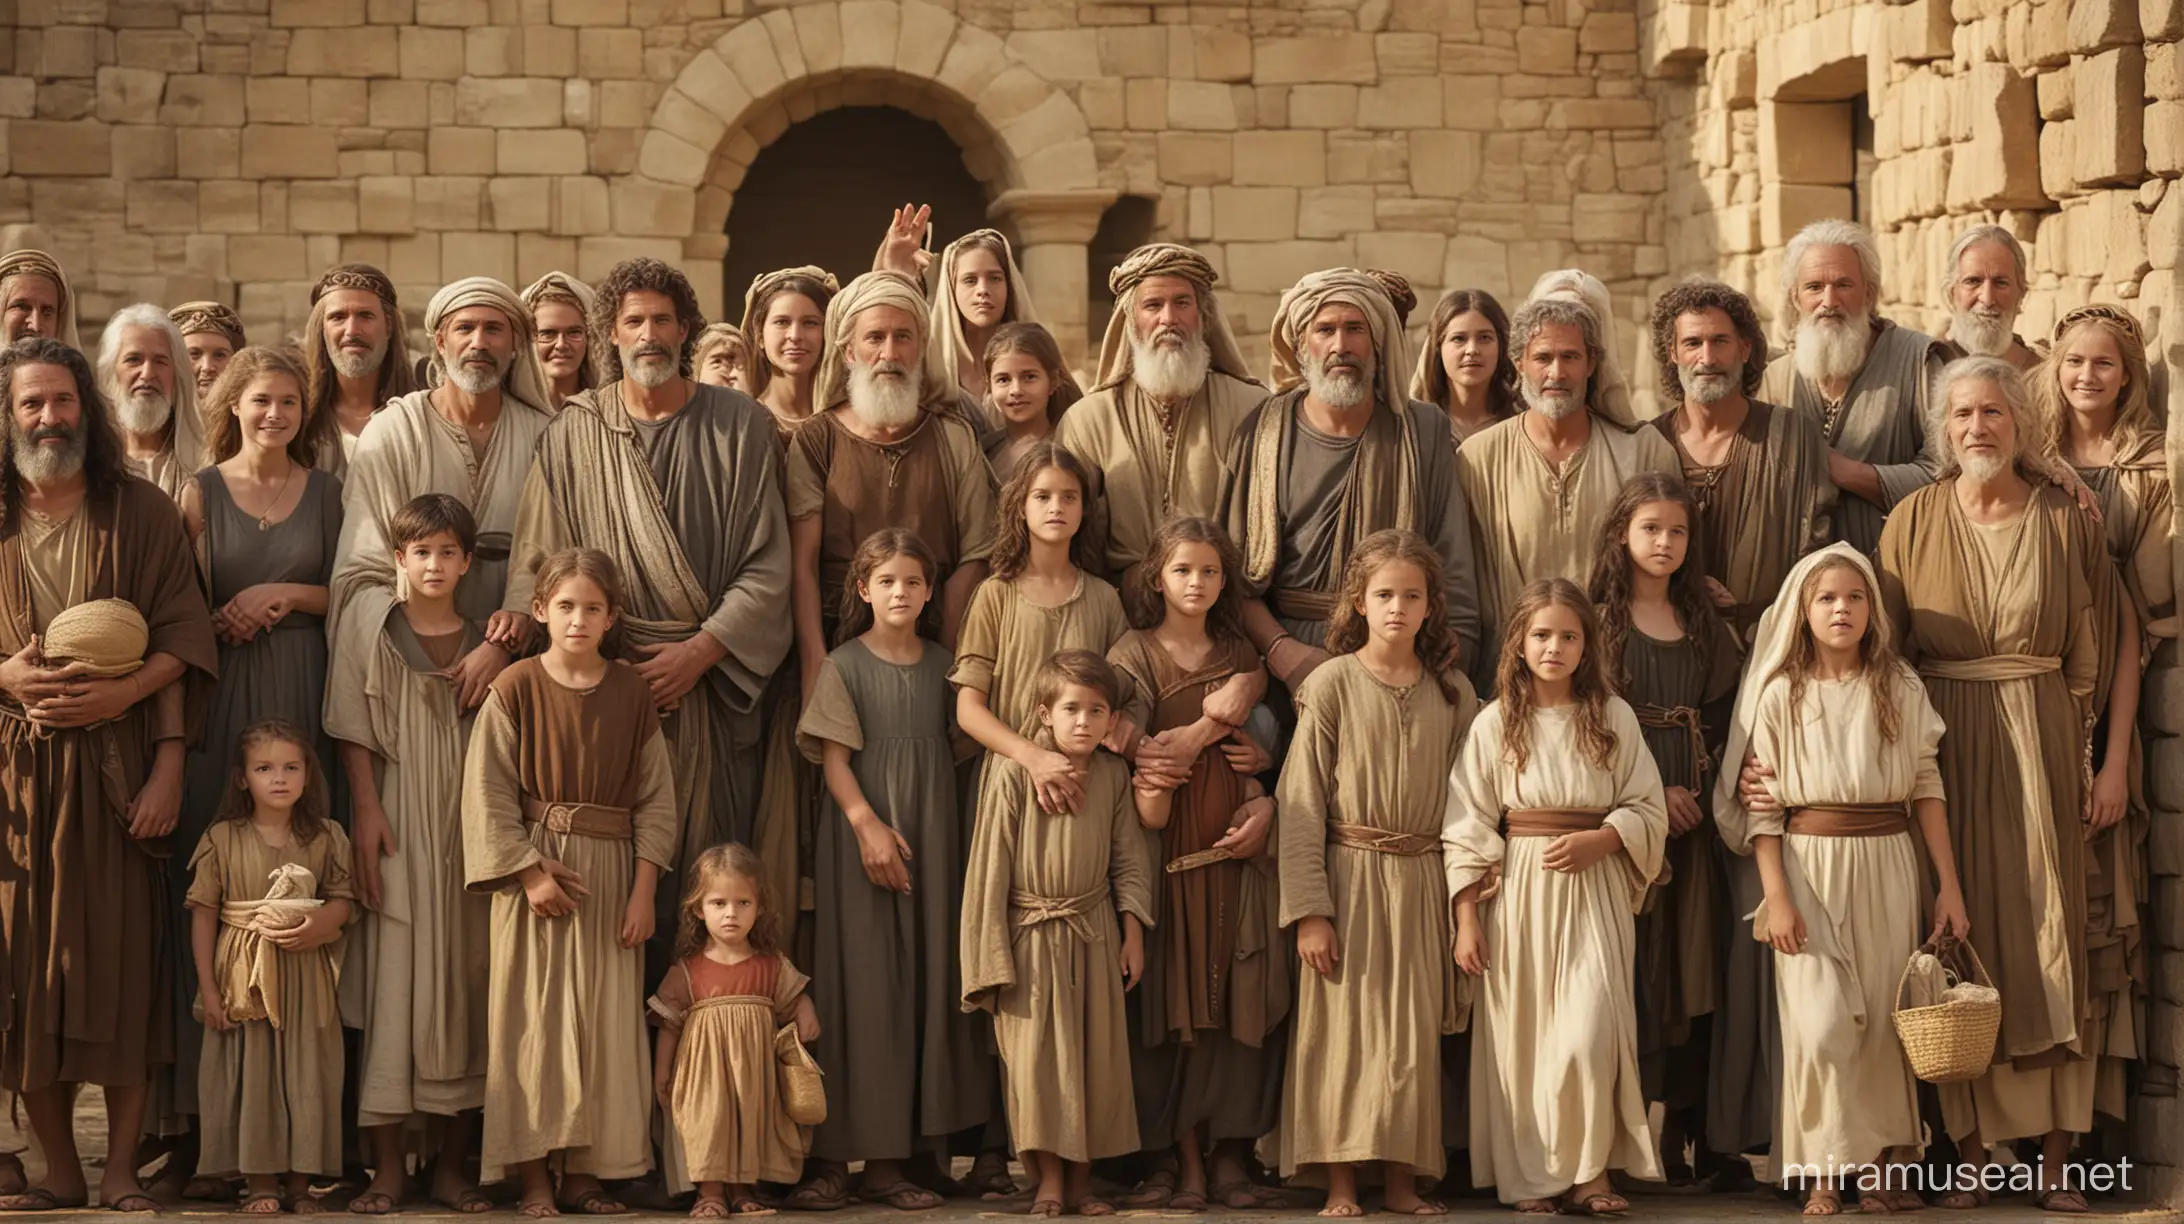 Multigenerational Gathering in Biblical Setting